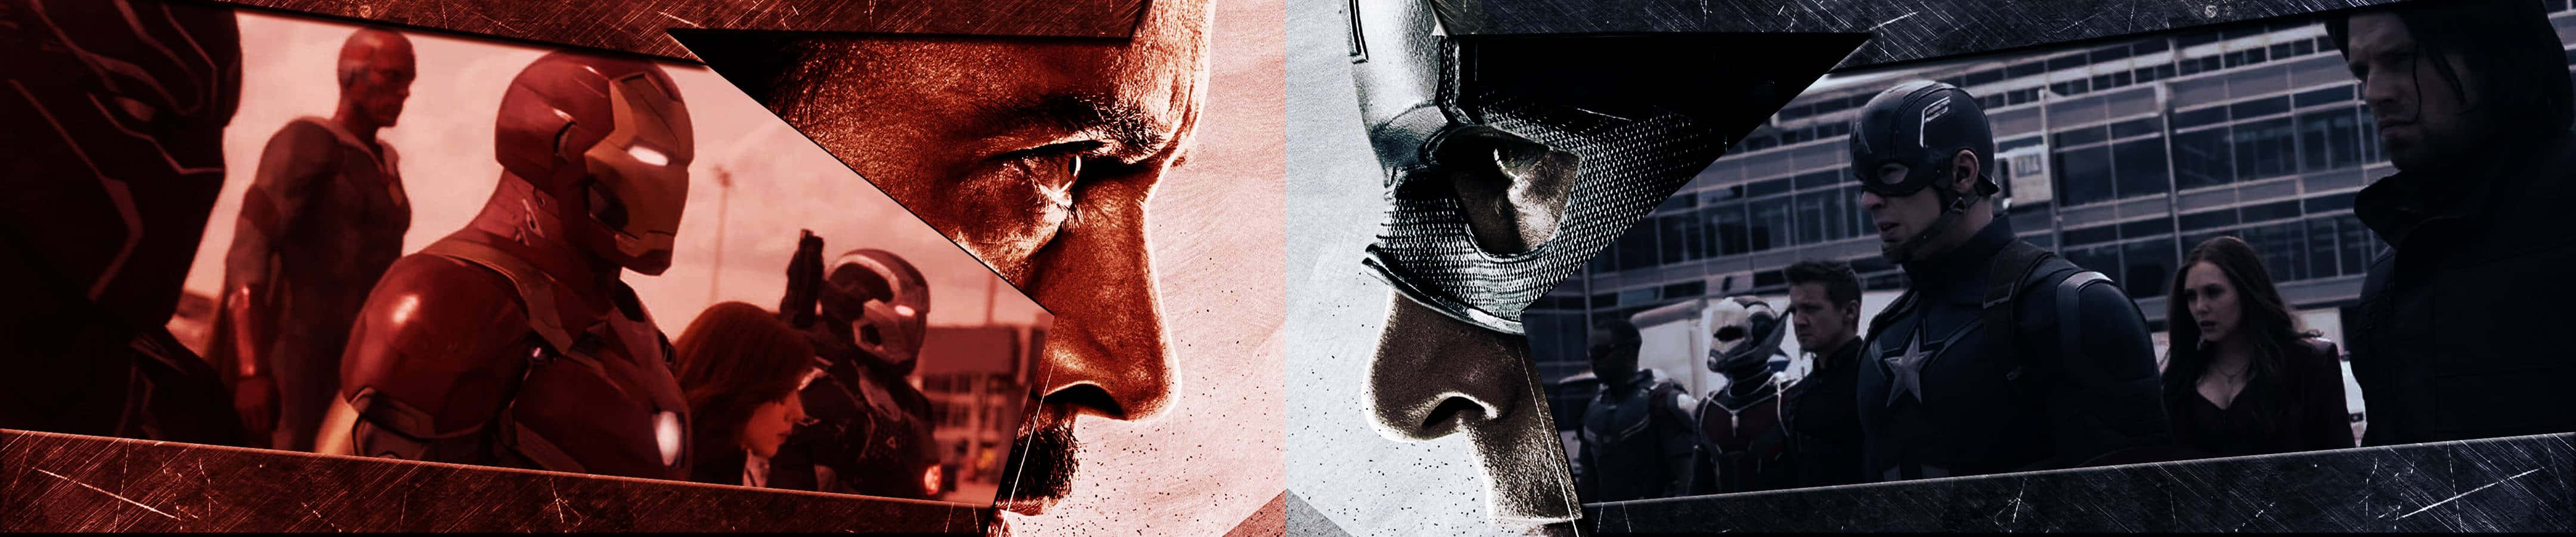 Ironman Und Captain America Im Dual-screen-modus, Gesicht An Gesicht. Wallpaper